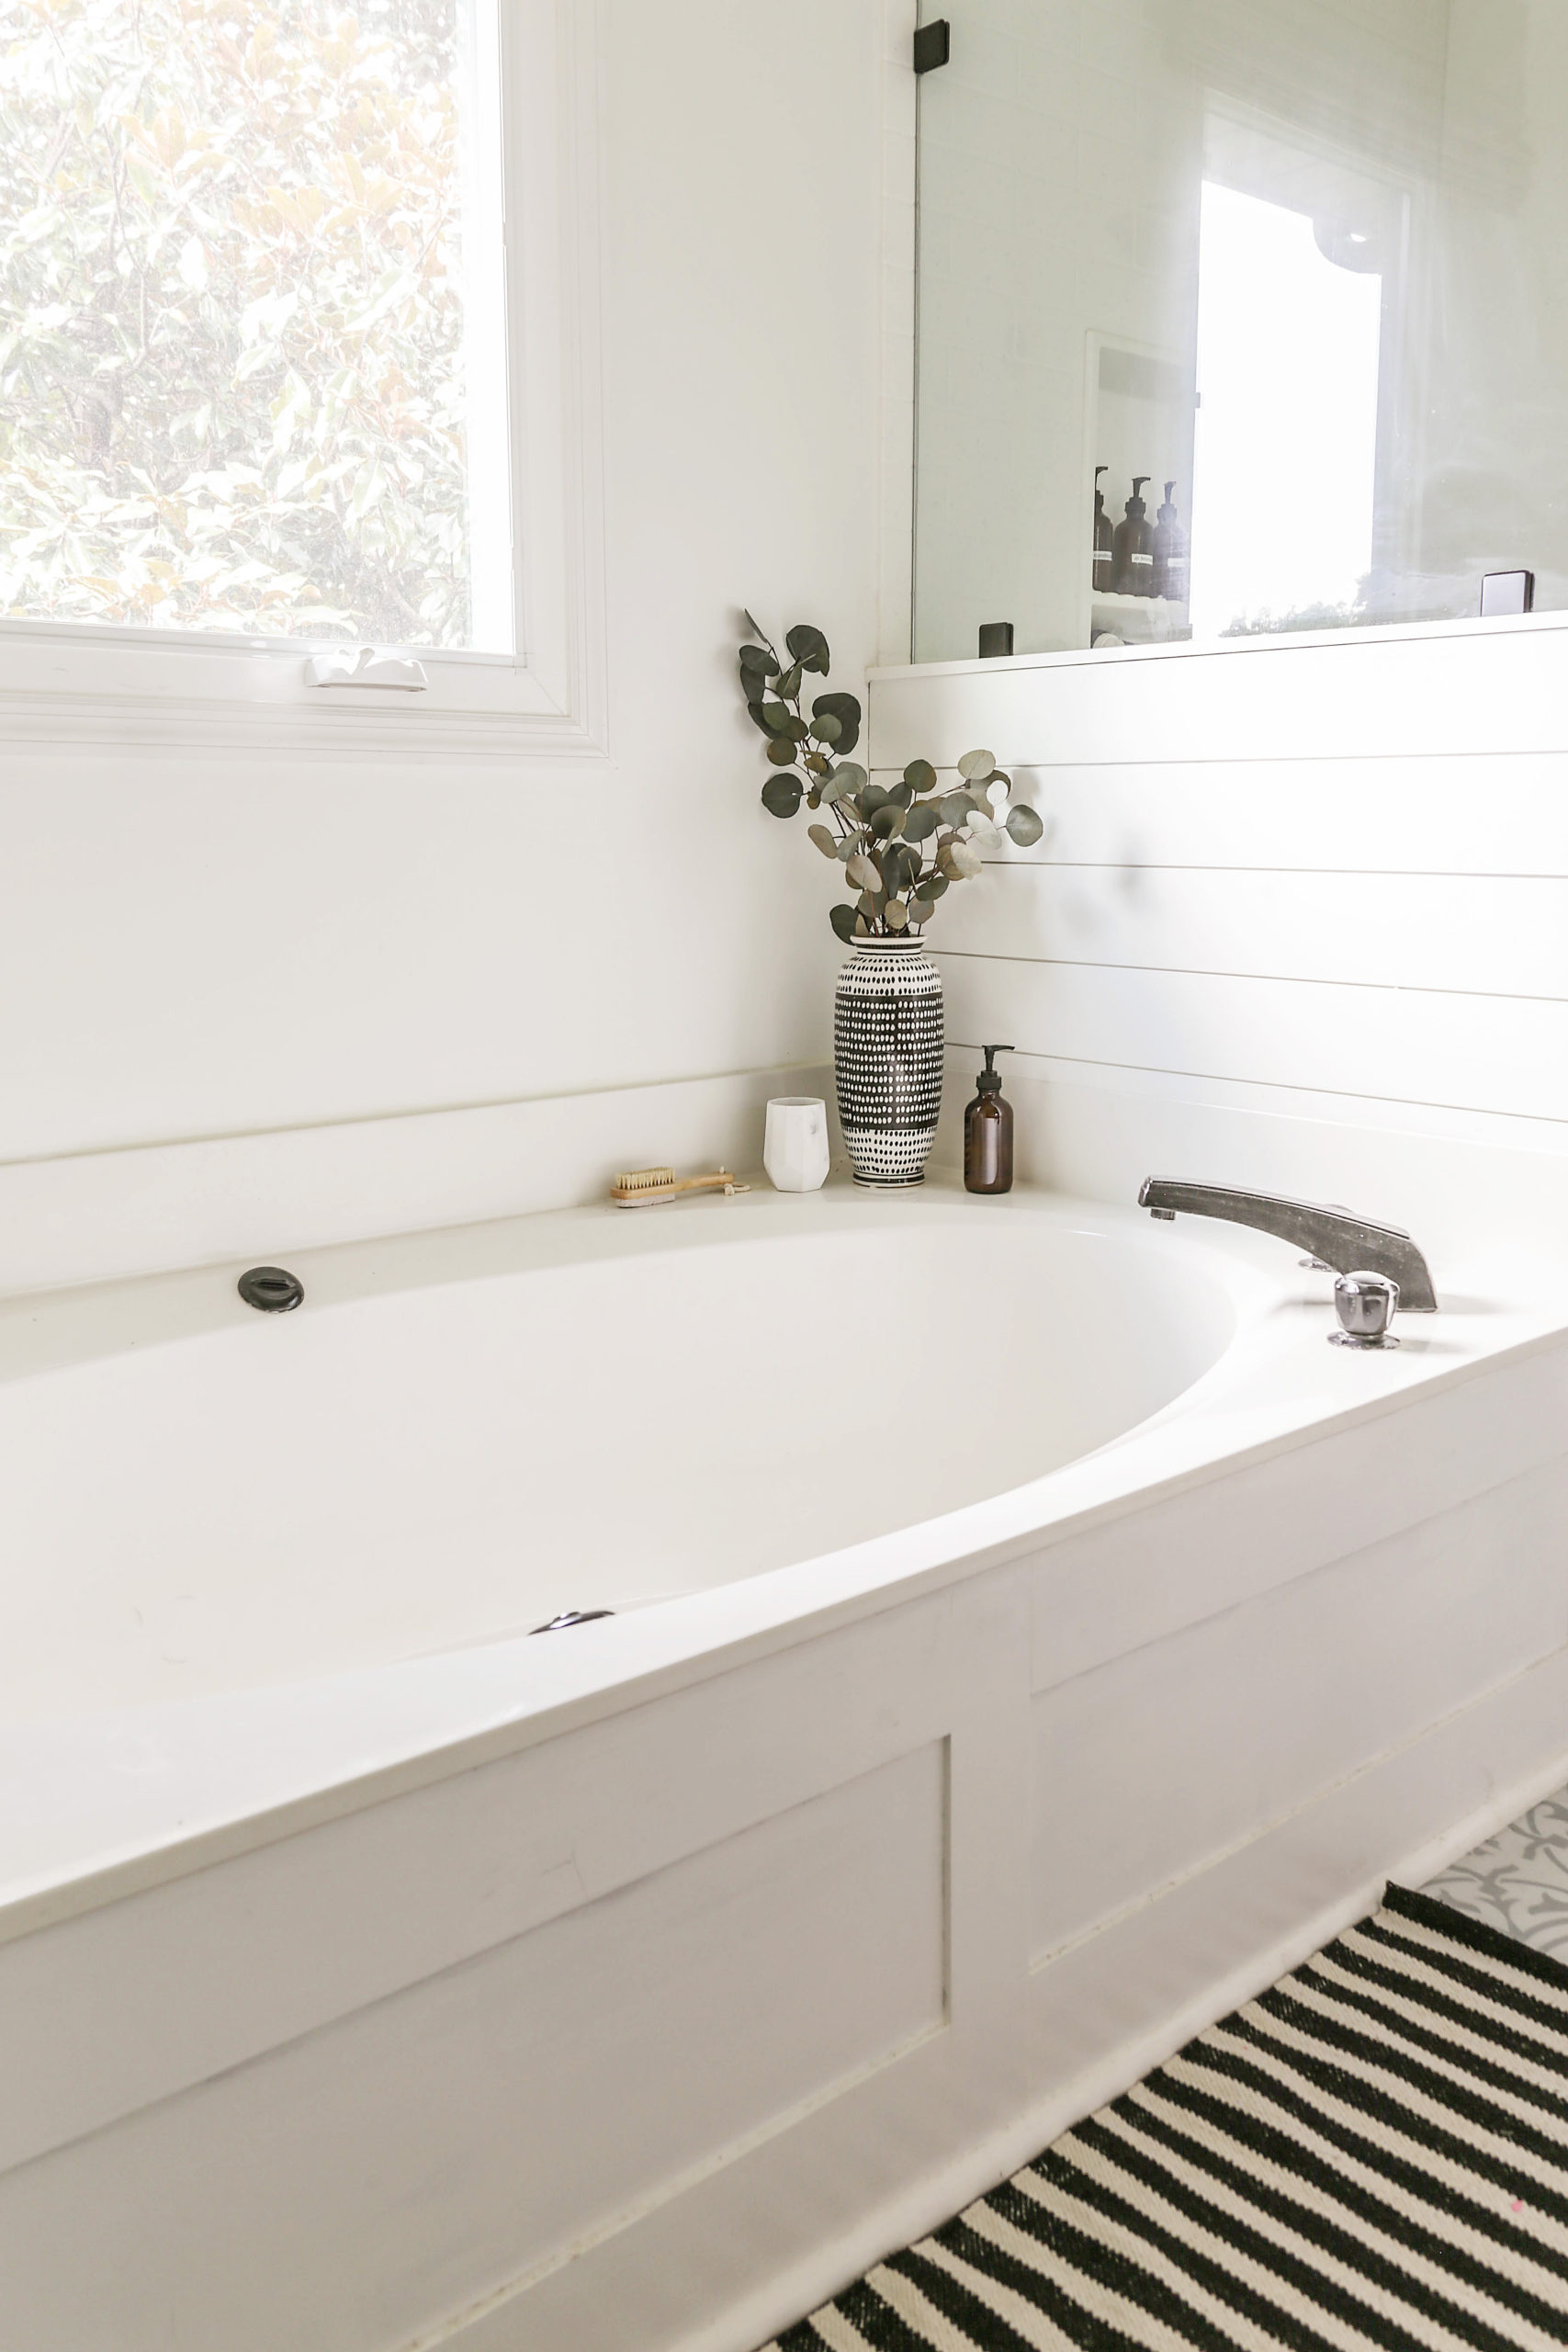 Kitchen  Bathroom Remodeling Blog by Kitchen Cabinet Kings  Corner jacuzzi  tub Jetted bath tubs Bathtub sizes